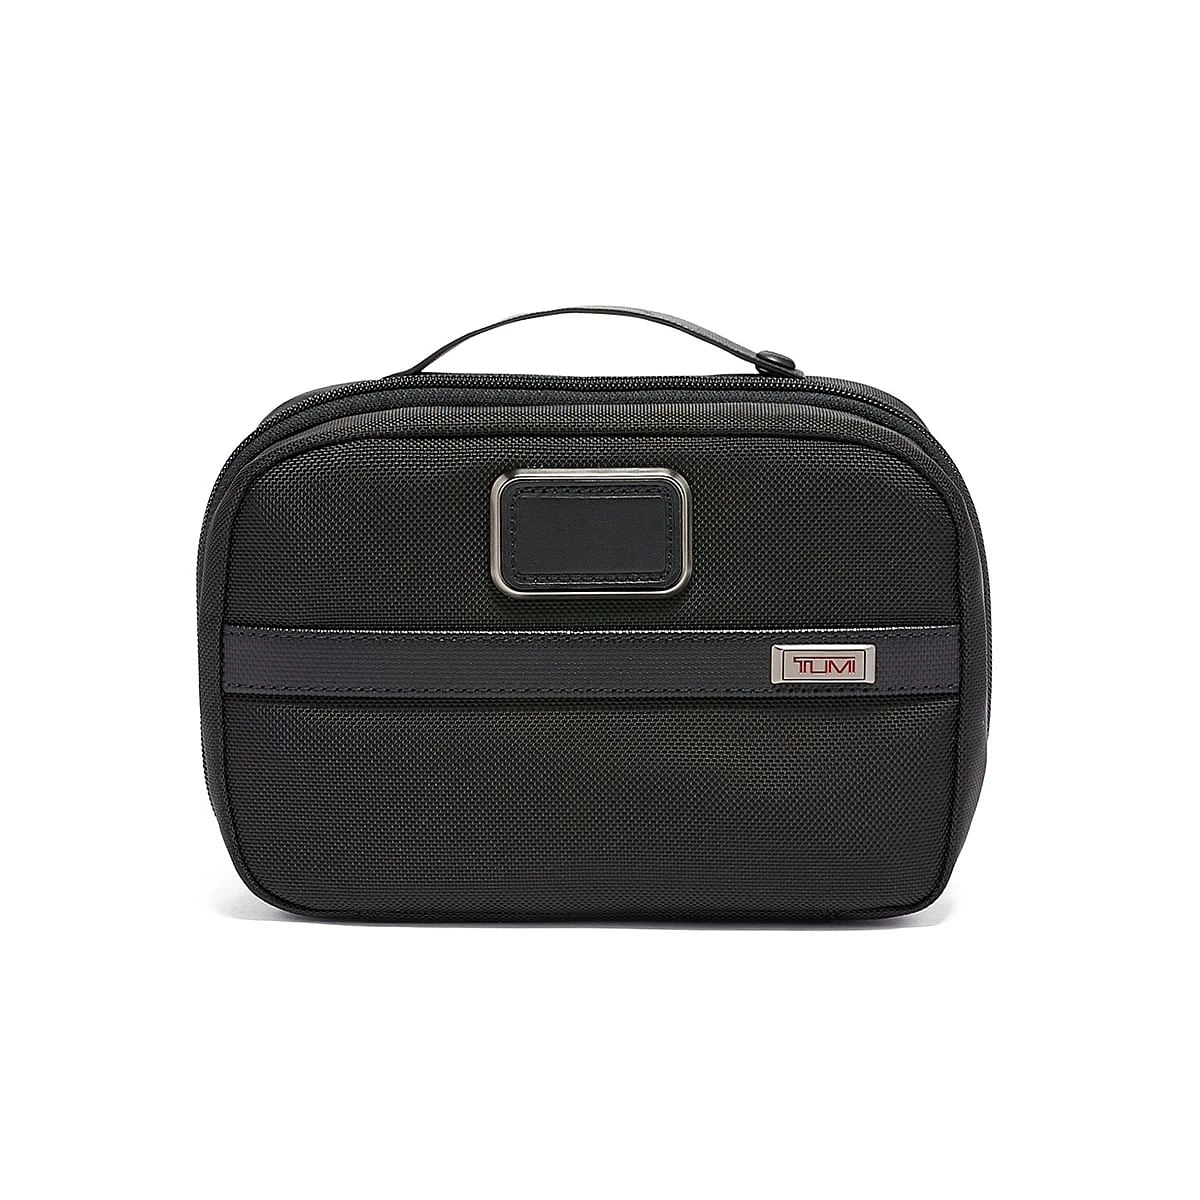 Tumi Alpha 22 Inch Trifold Carry-On Garment Bag Luggage #22133 - Ruby Lane